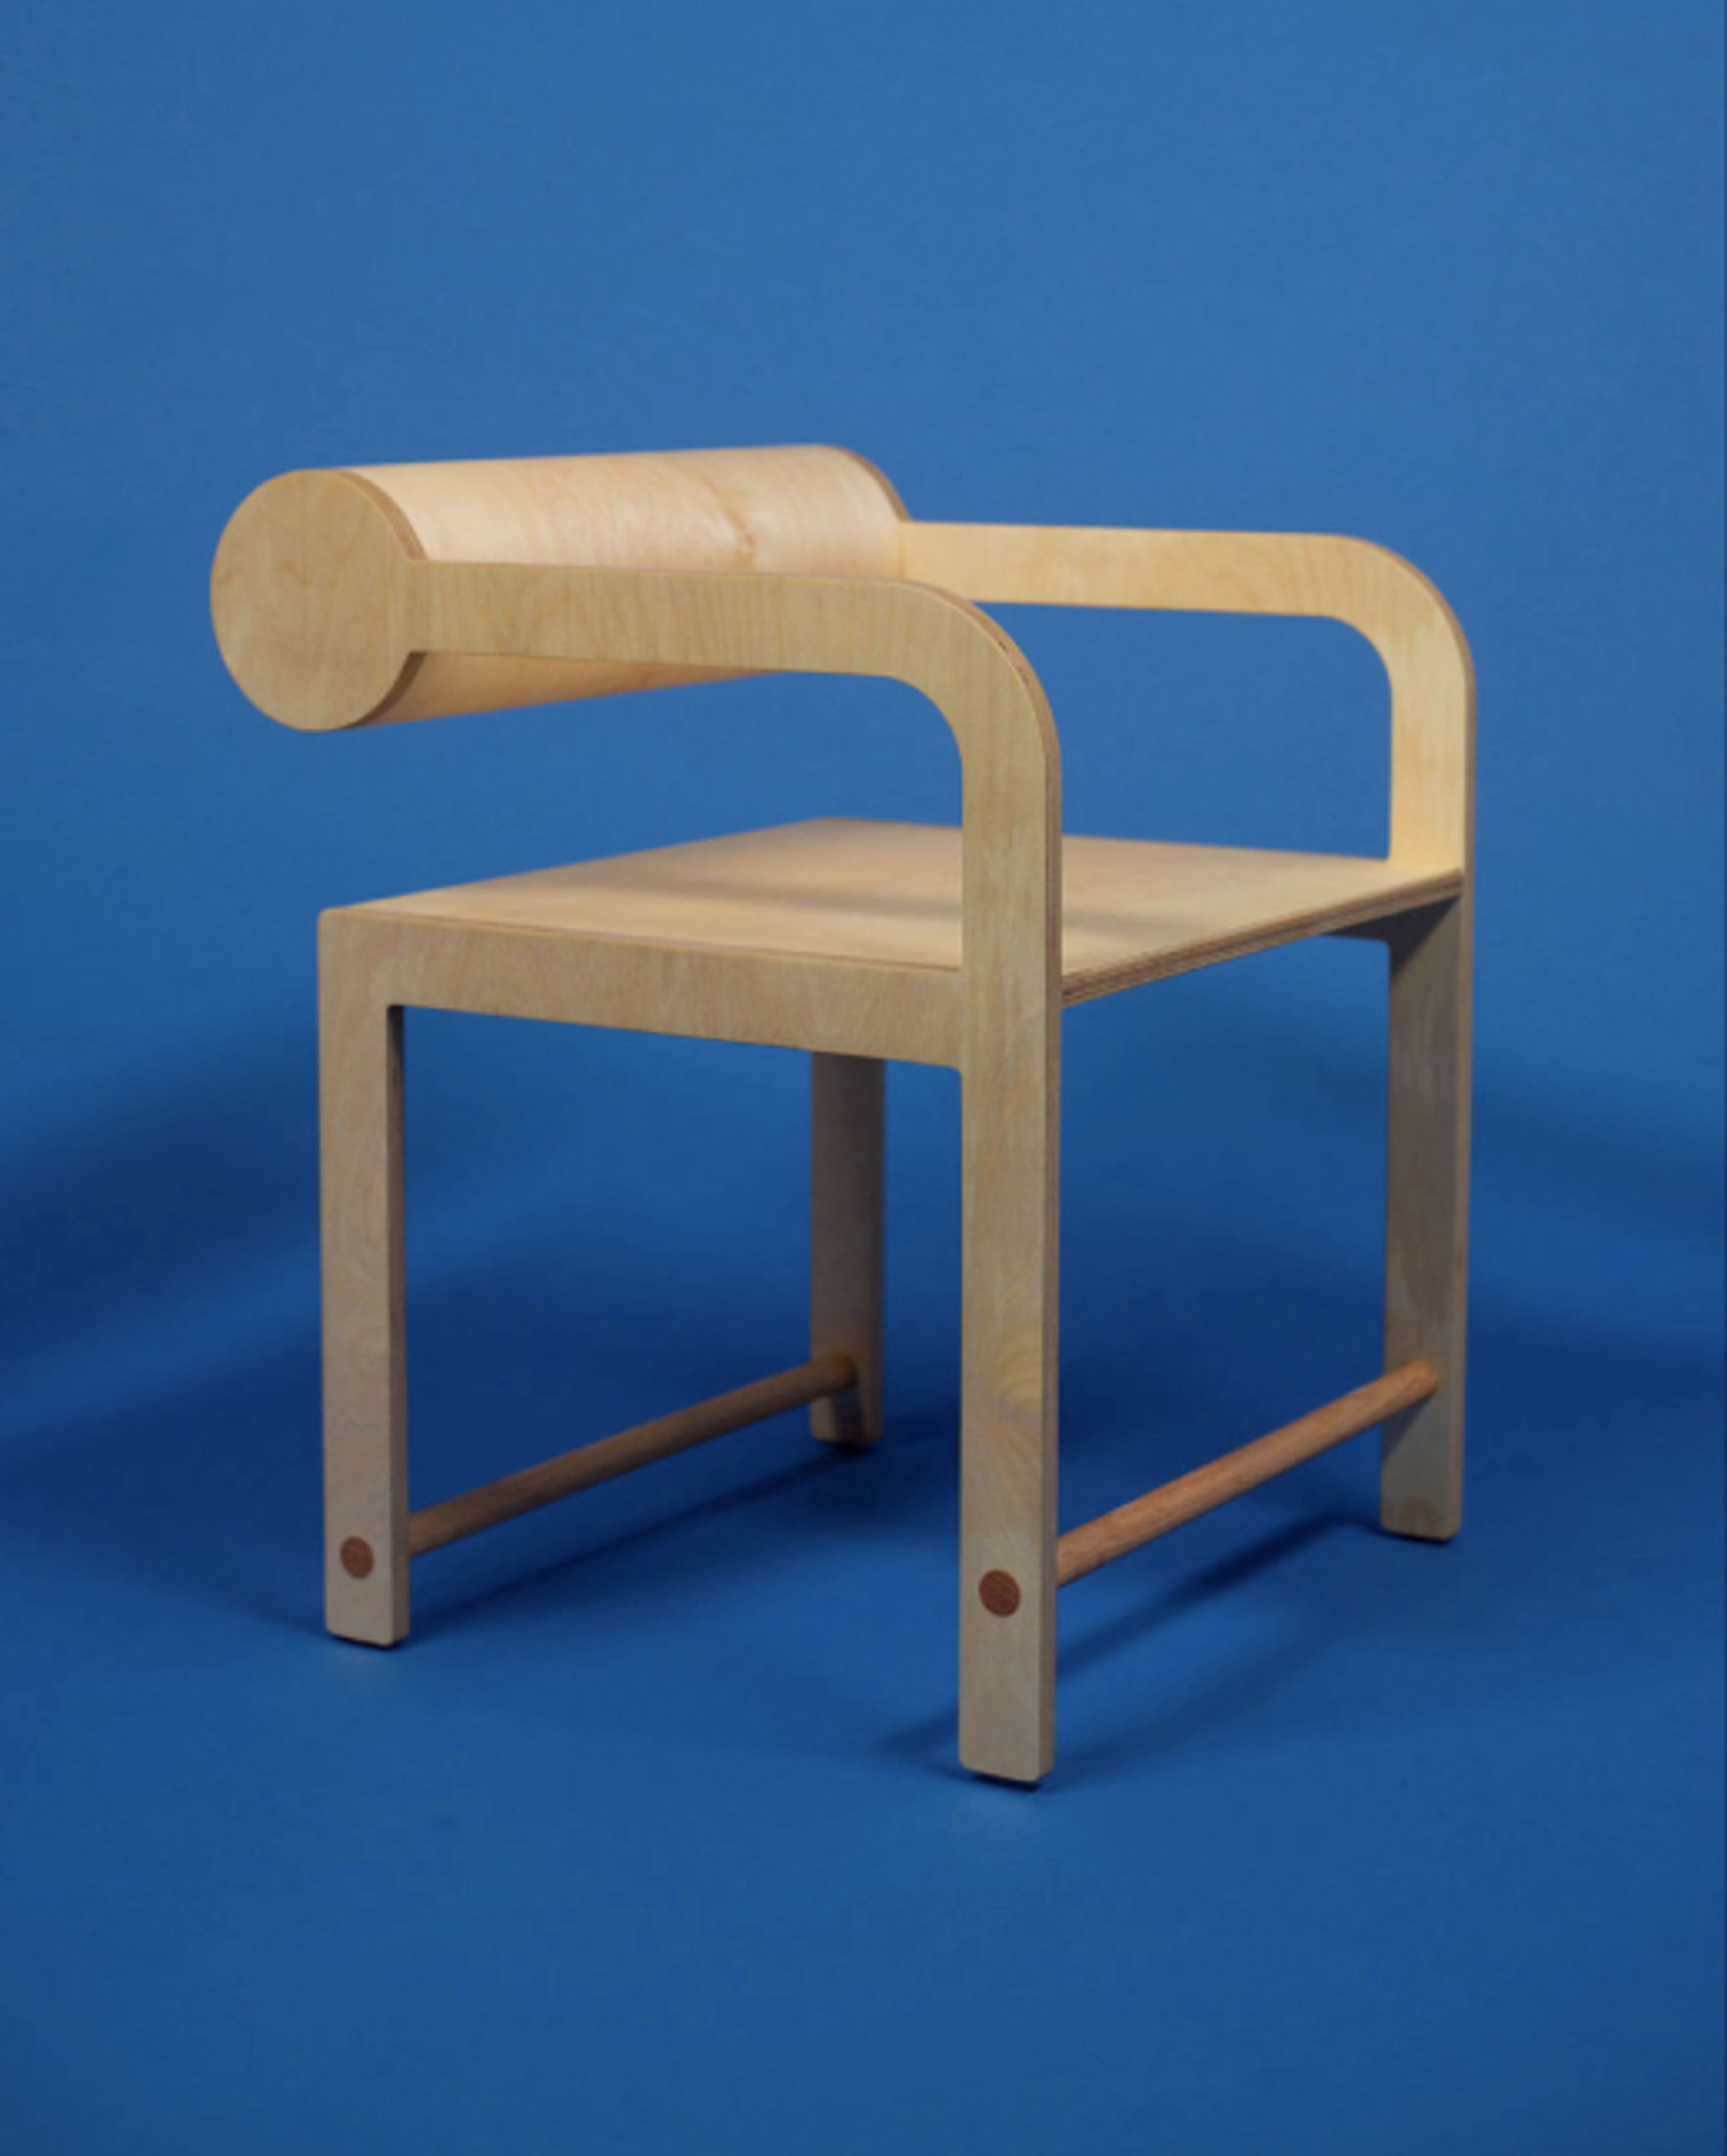 A chair designed by LA furniture studio Waka Waka on a blue background